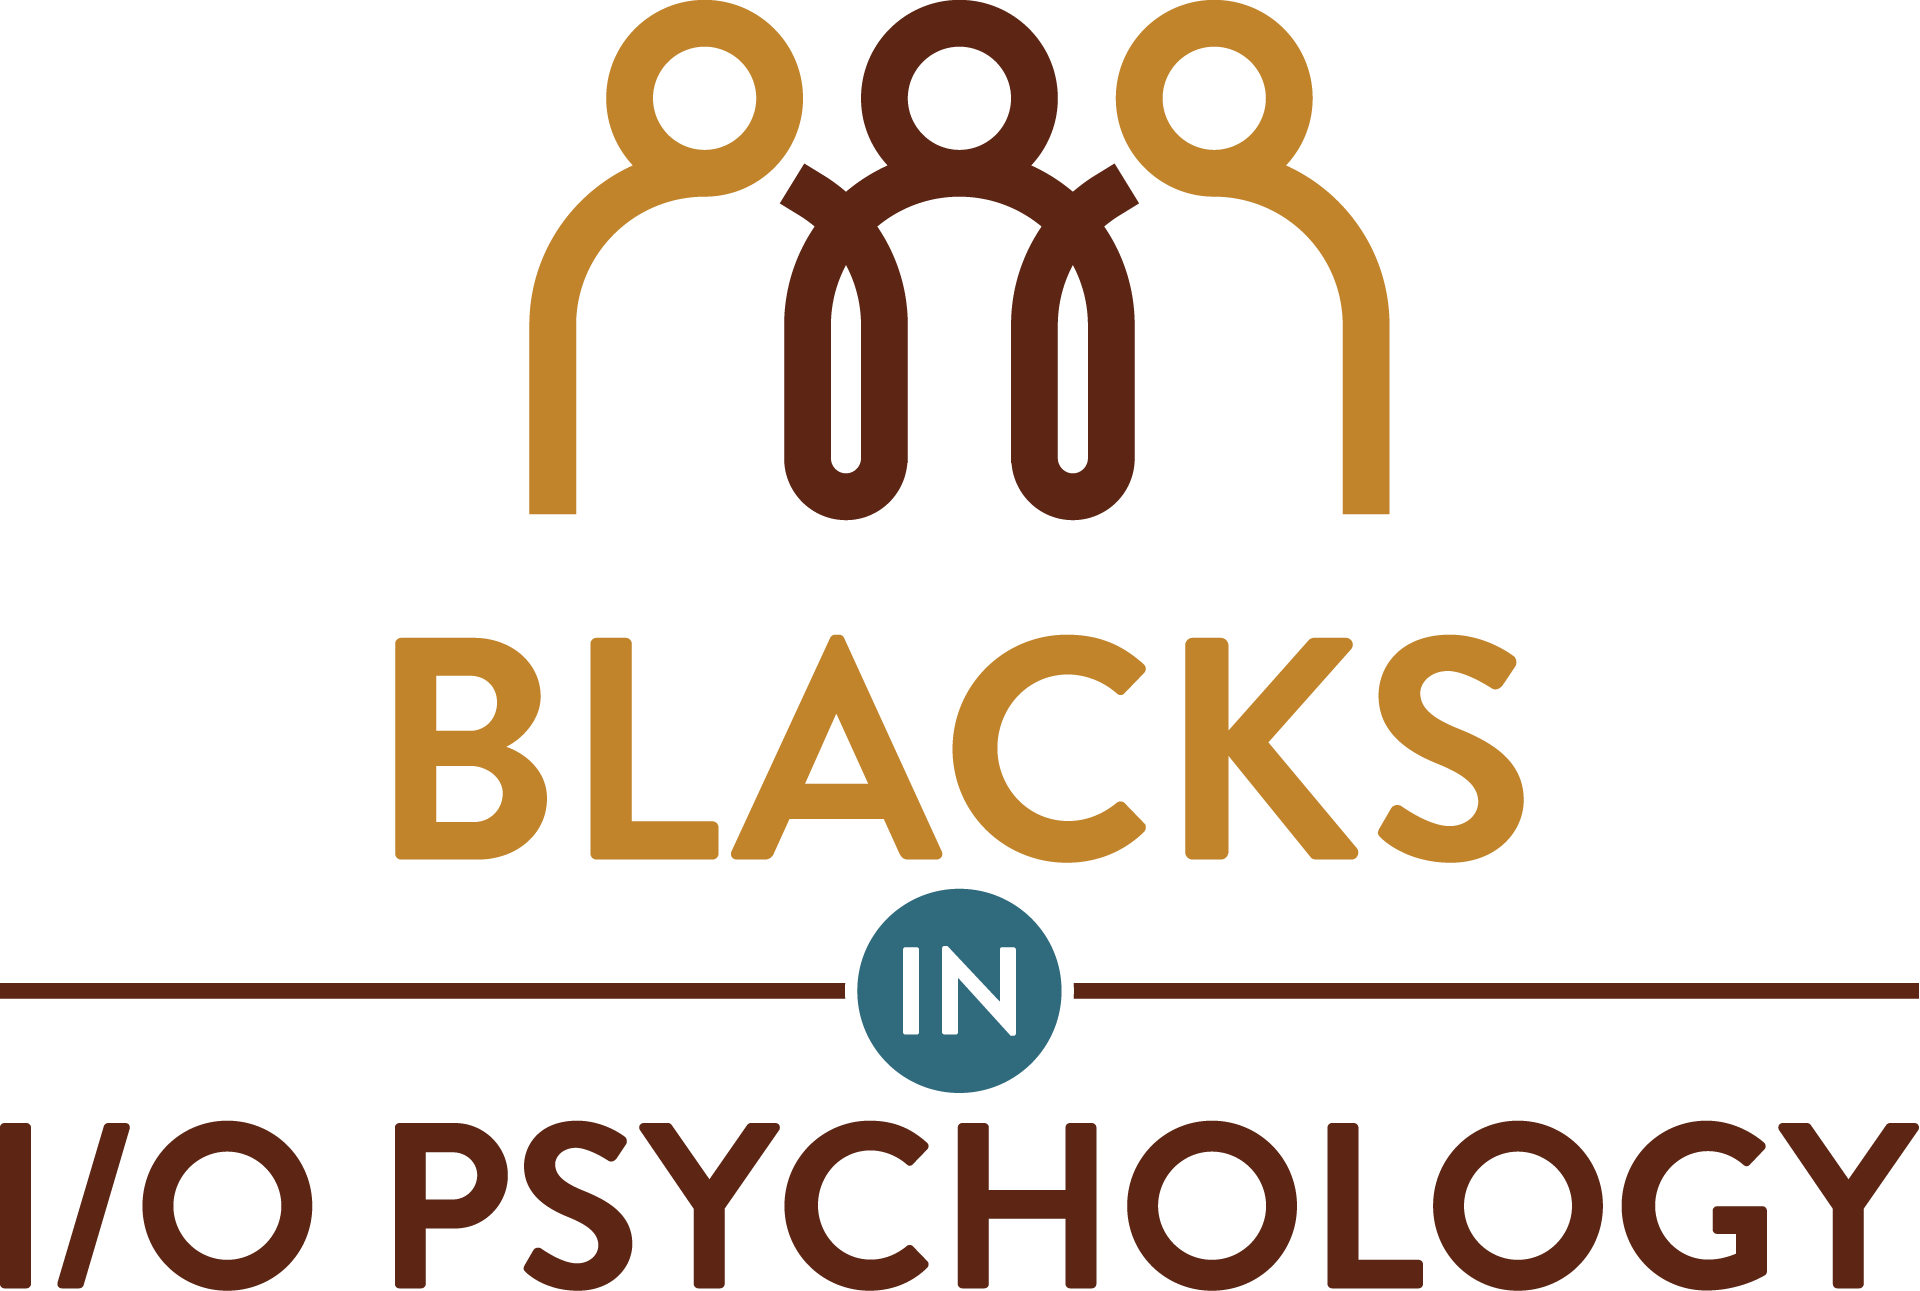 Blacks in I/O Psychology